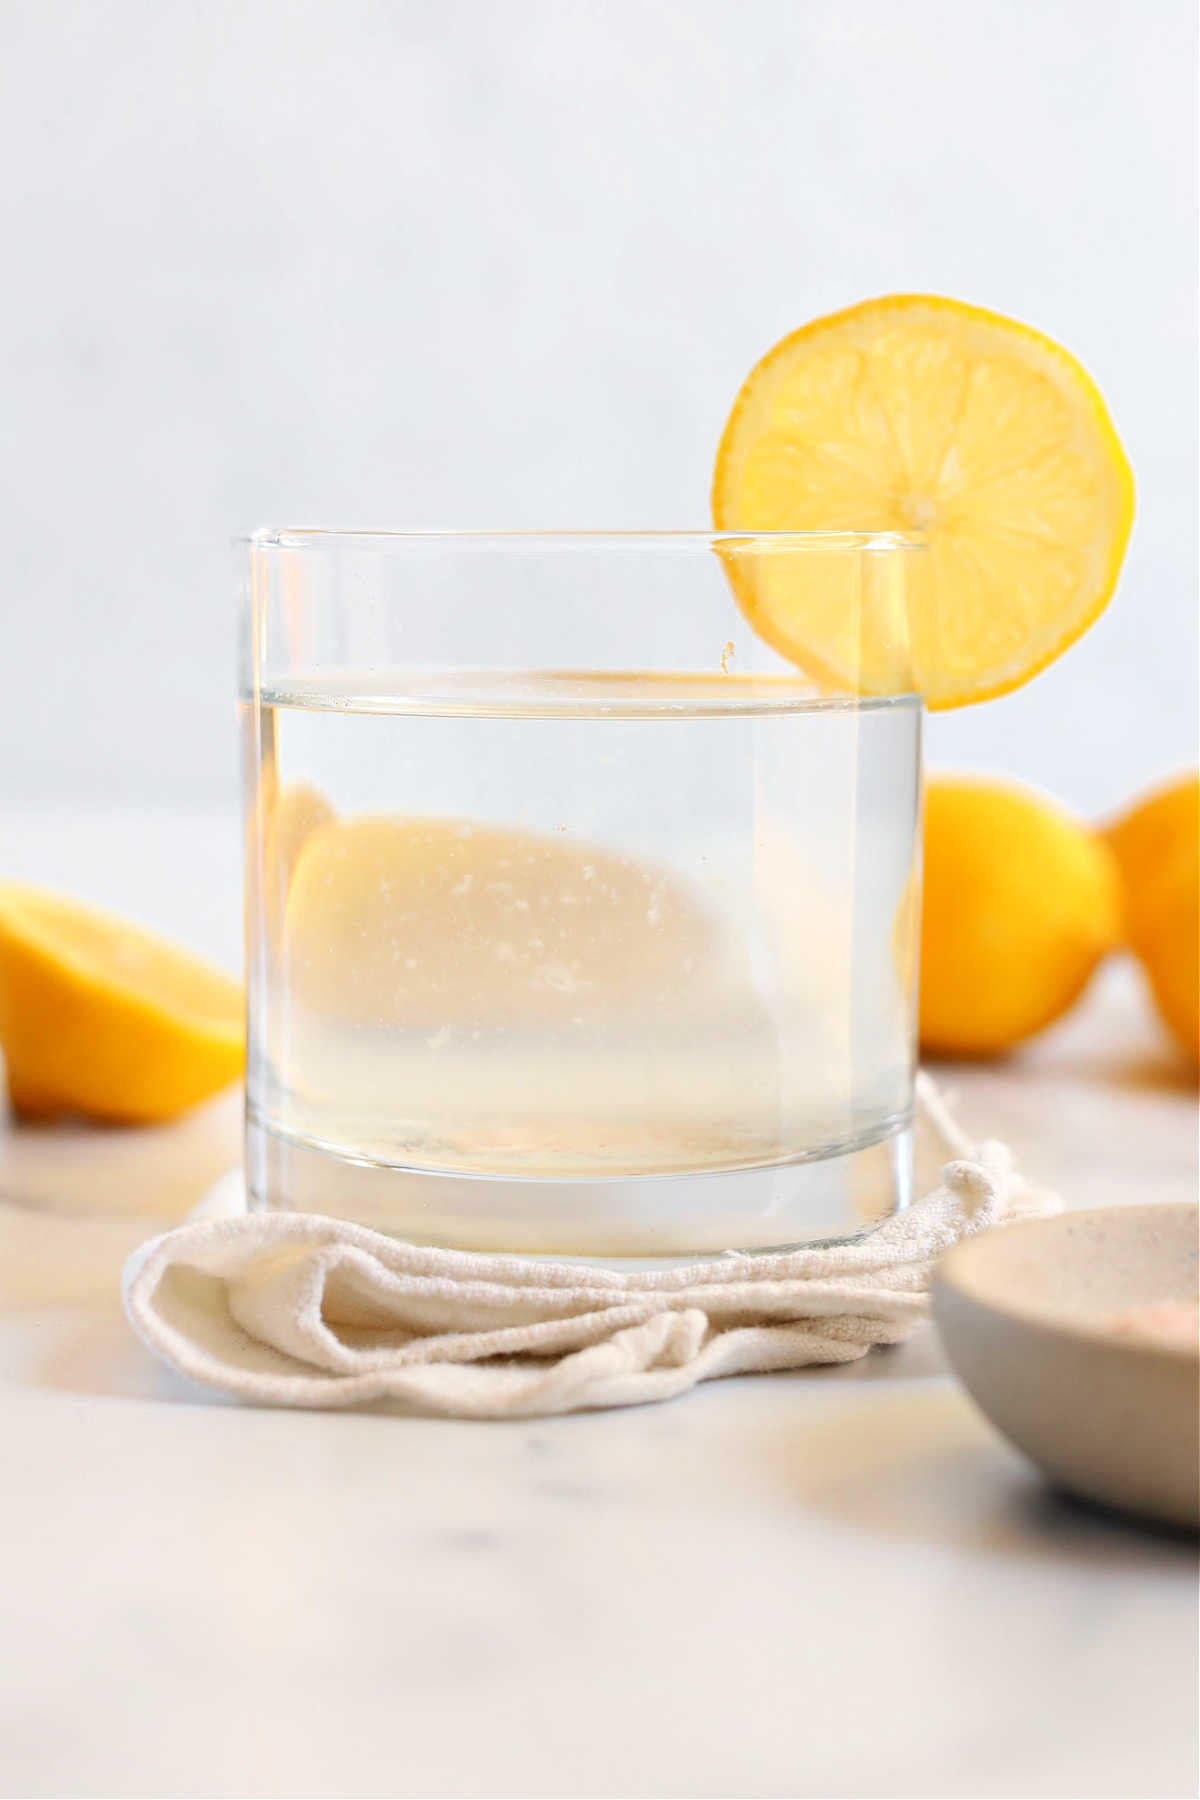 lemon salt water drink in a glass with a slice of lemon